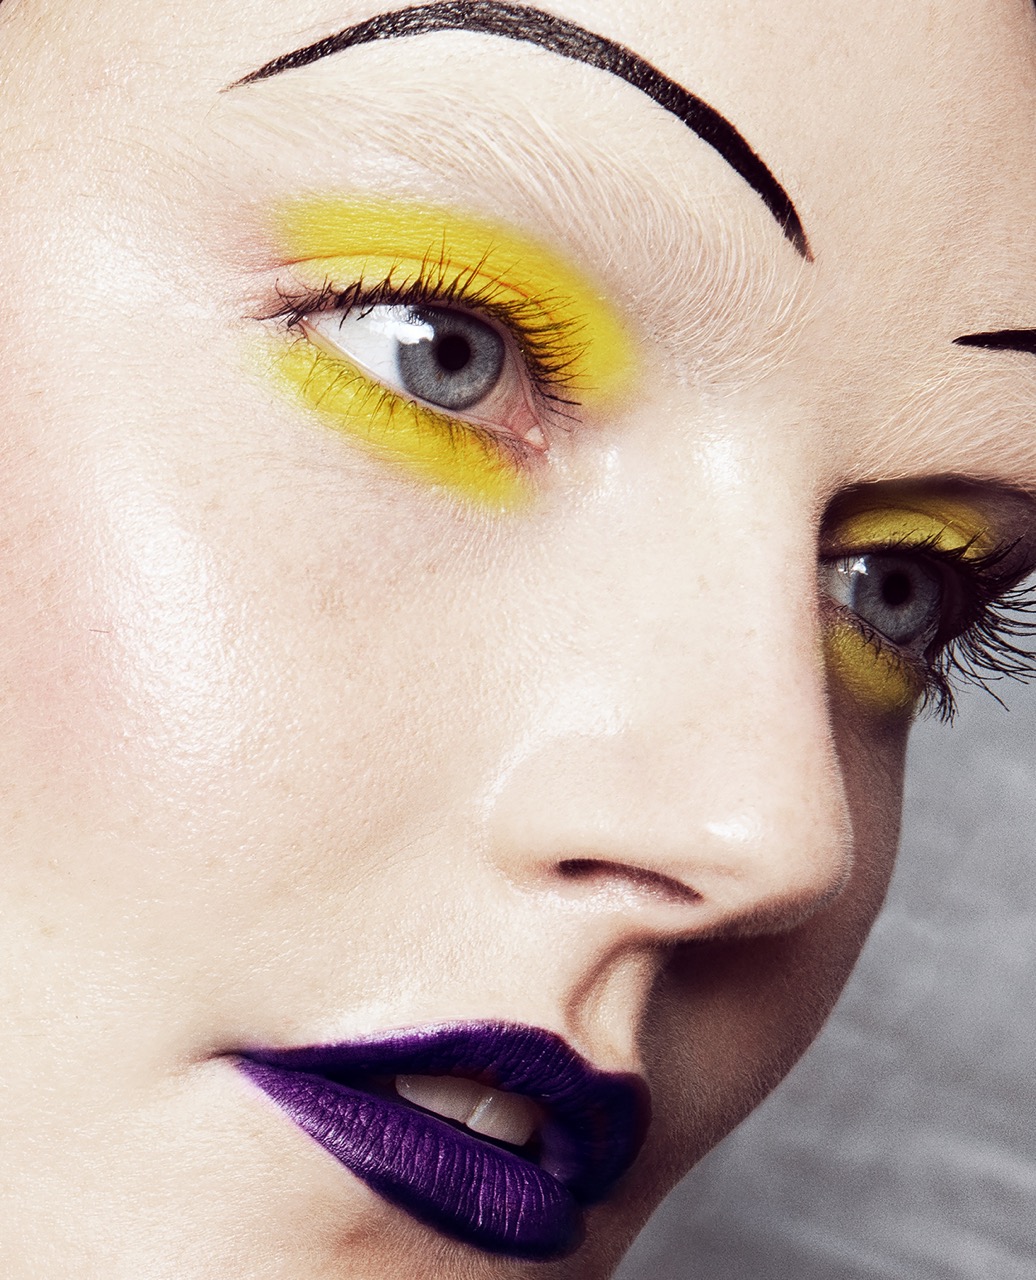  On Eyes MAC Cosmetics Eyeshadow in Chrome Yellow / MAC Cosmetics Mascara in Extended Play // On Brows KVD Beauty Tattoo Liner in Black // On Lips KVD Beauty Everlasting Liquid Lipstick in Scorpiris + Dark Wisteria